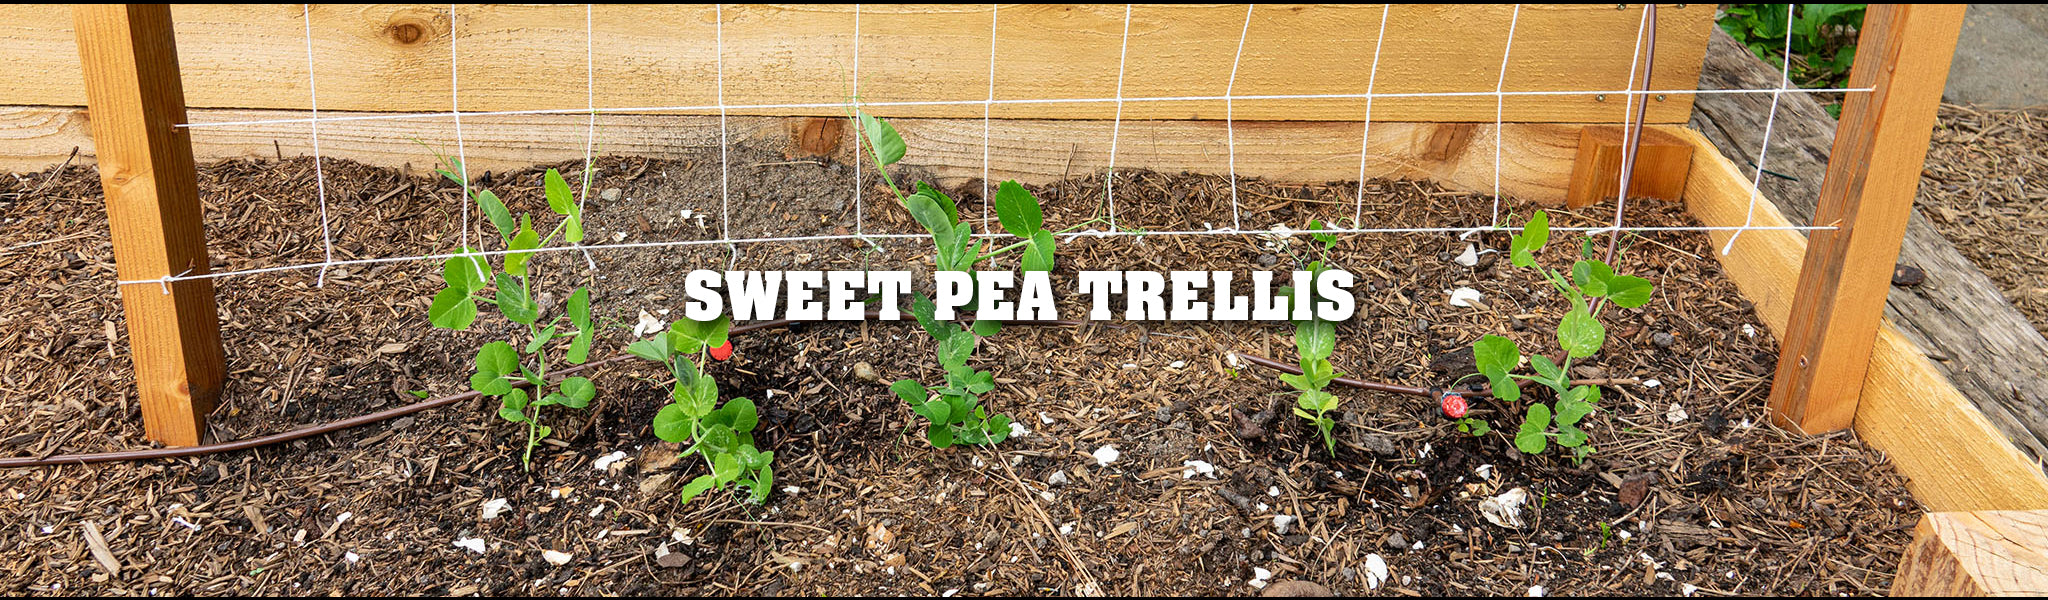 Making a Sweet Pea Trellis